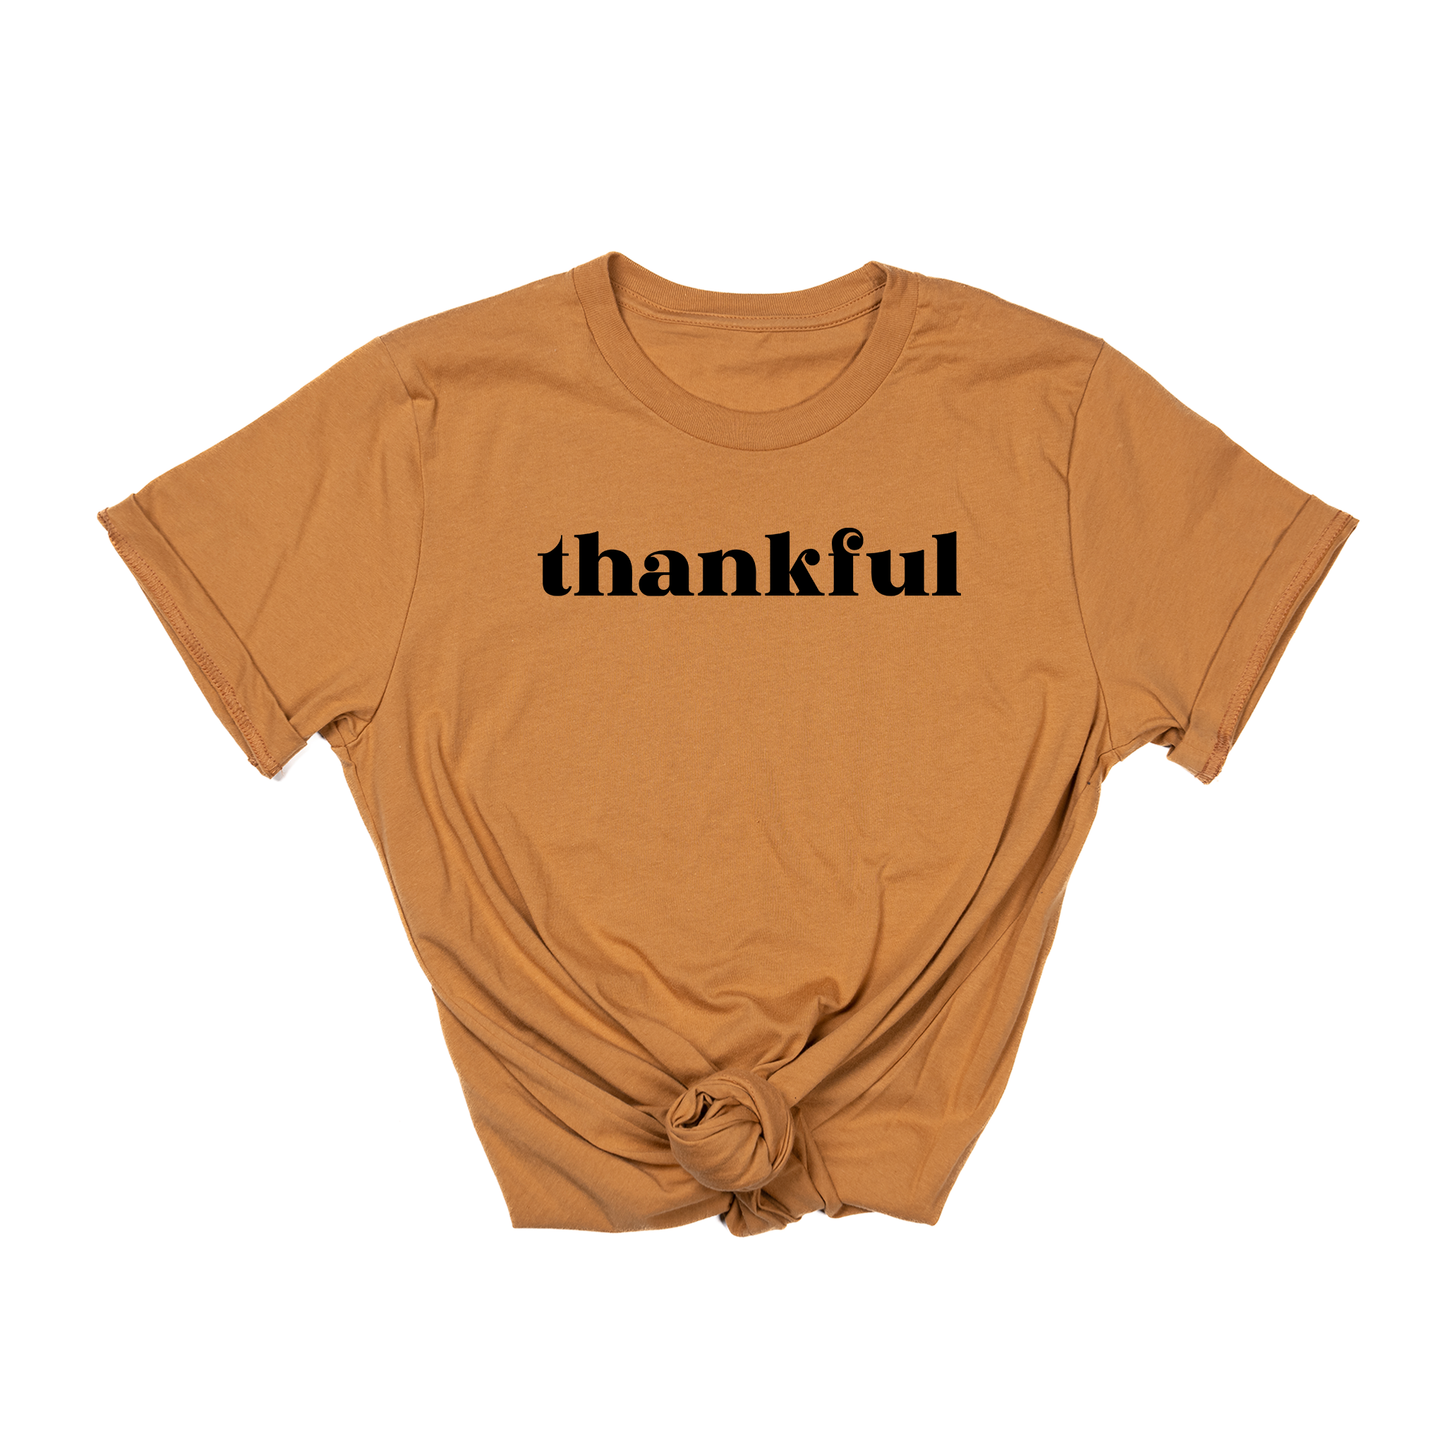 Thankful (Black) - Tee (Camel)